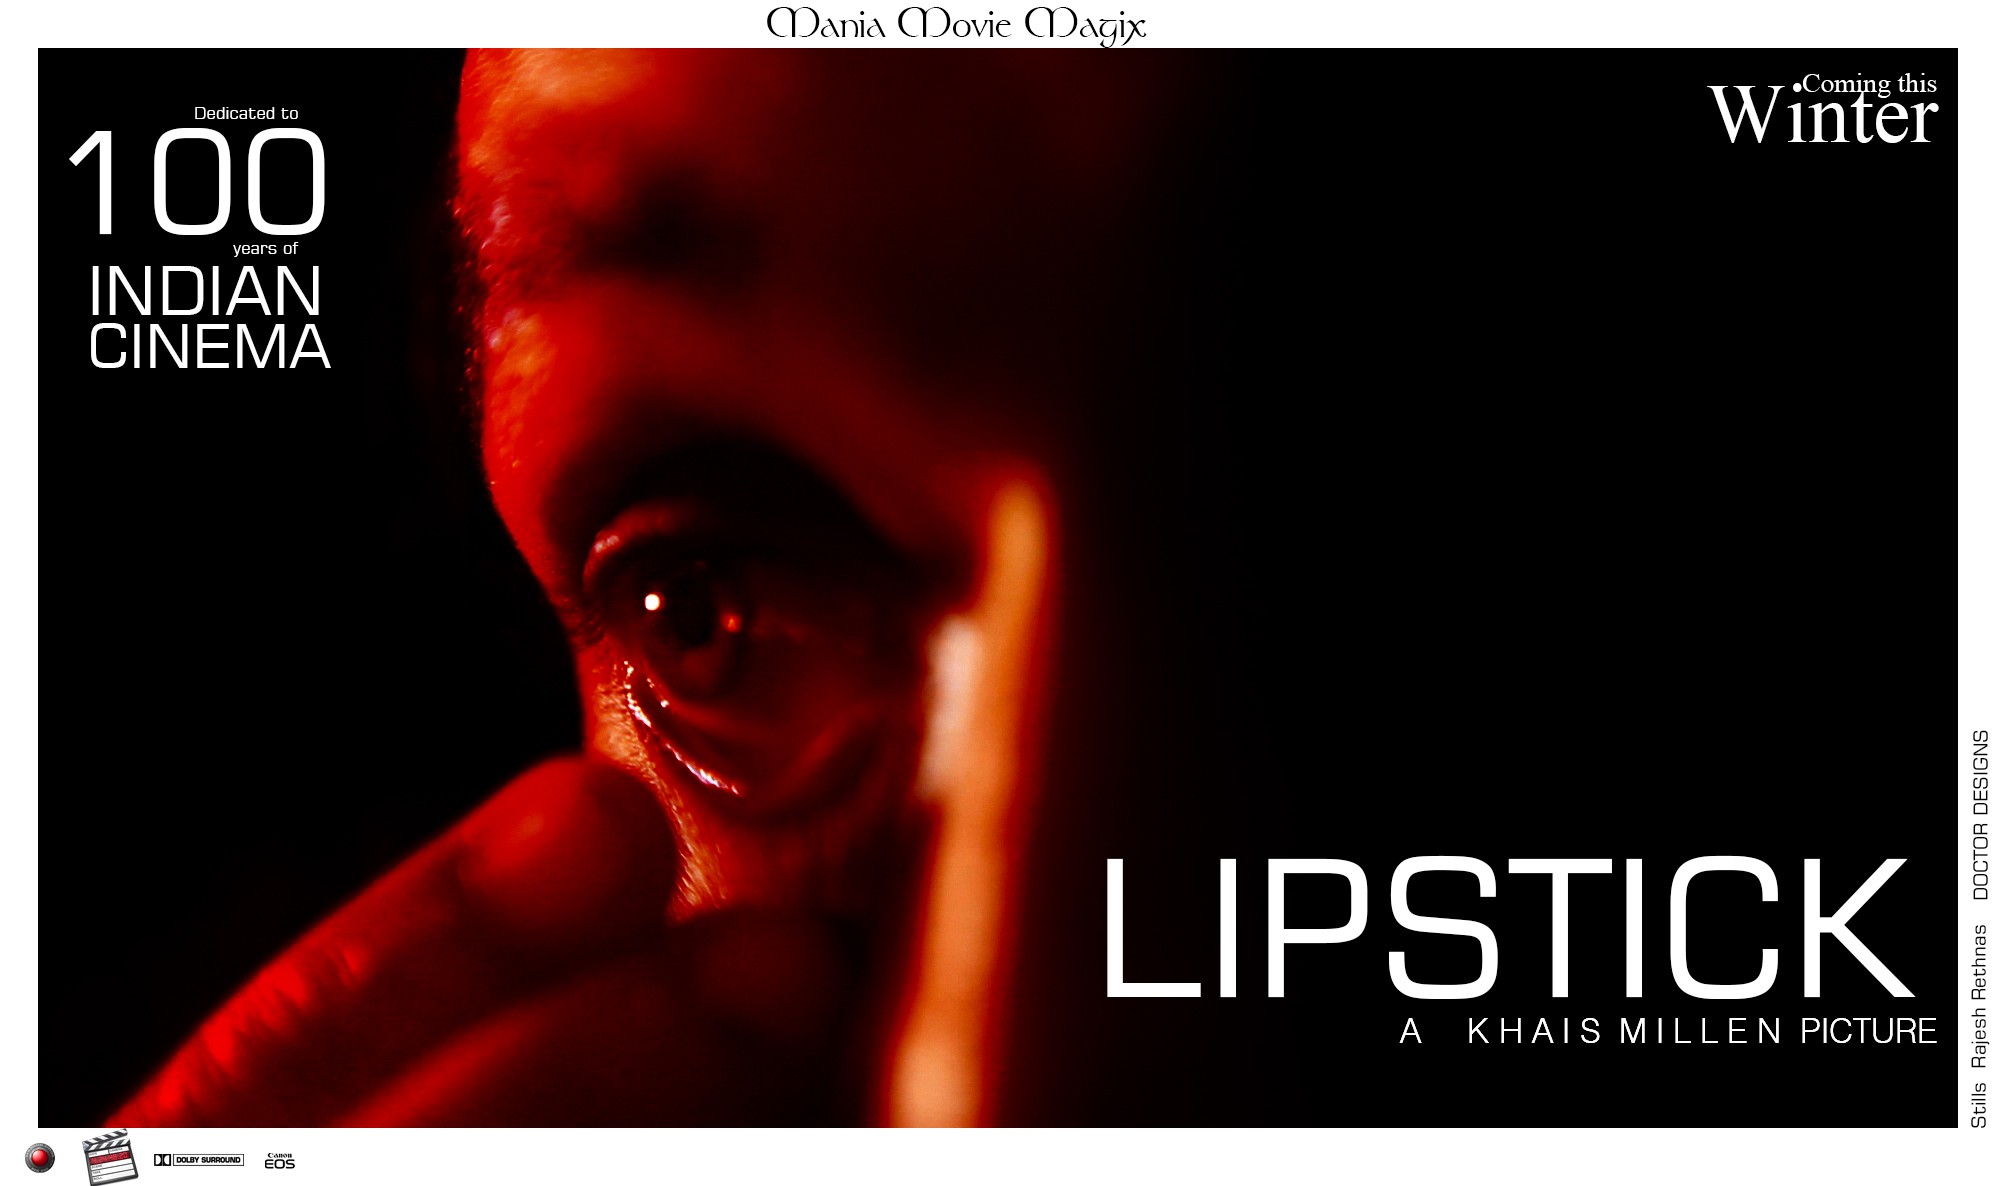 Mega Sized Movie Poster Image for Lipstick